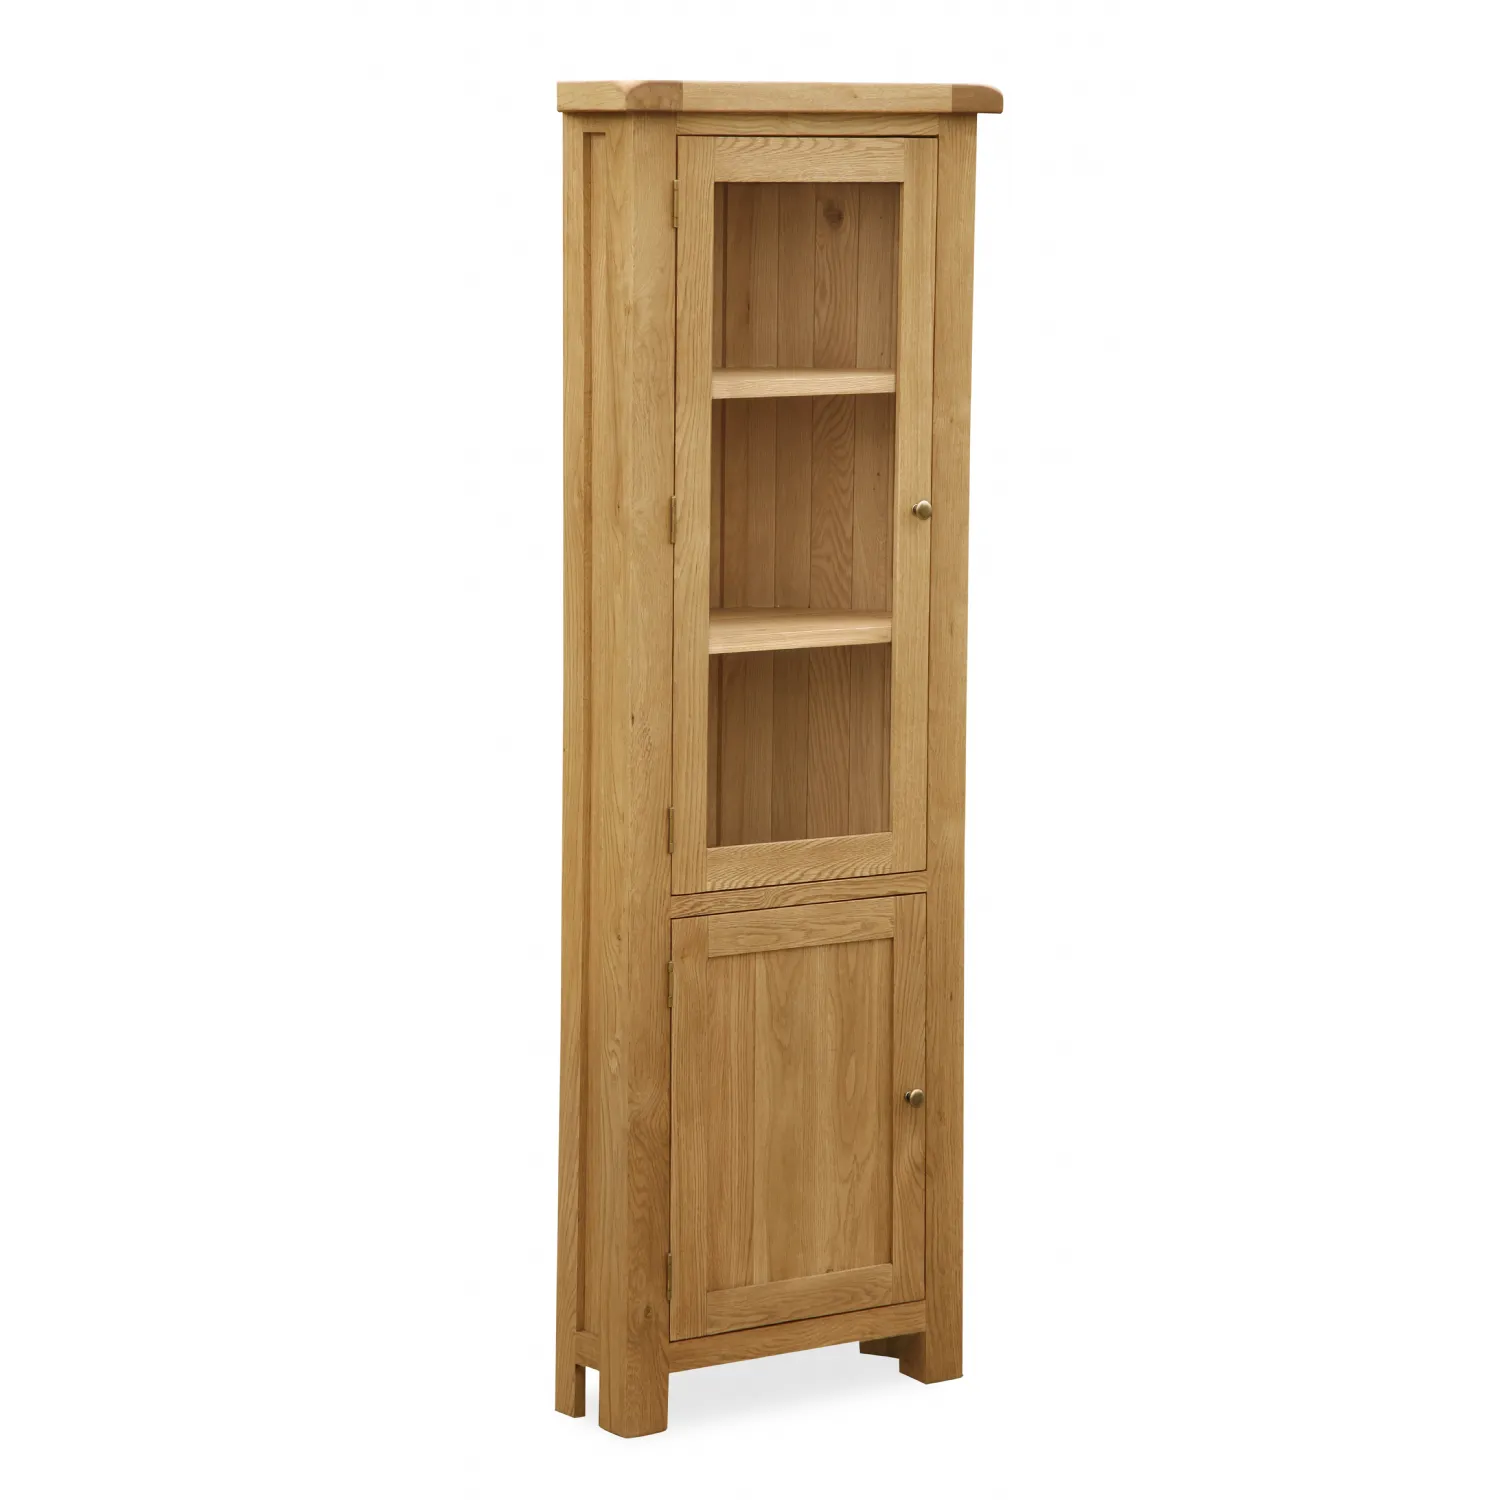 Salisbury Rustic Solid Oak Corner Display Cabinet Fit And Furnish